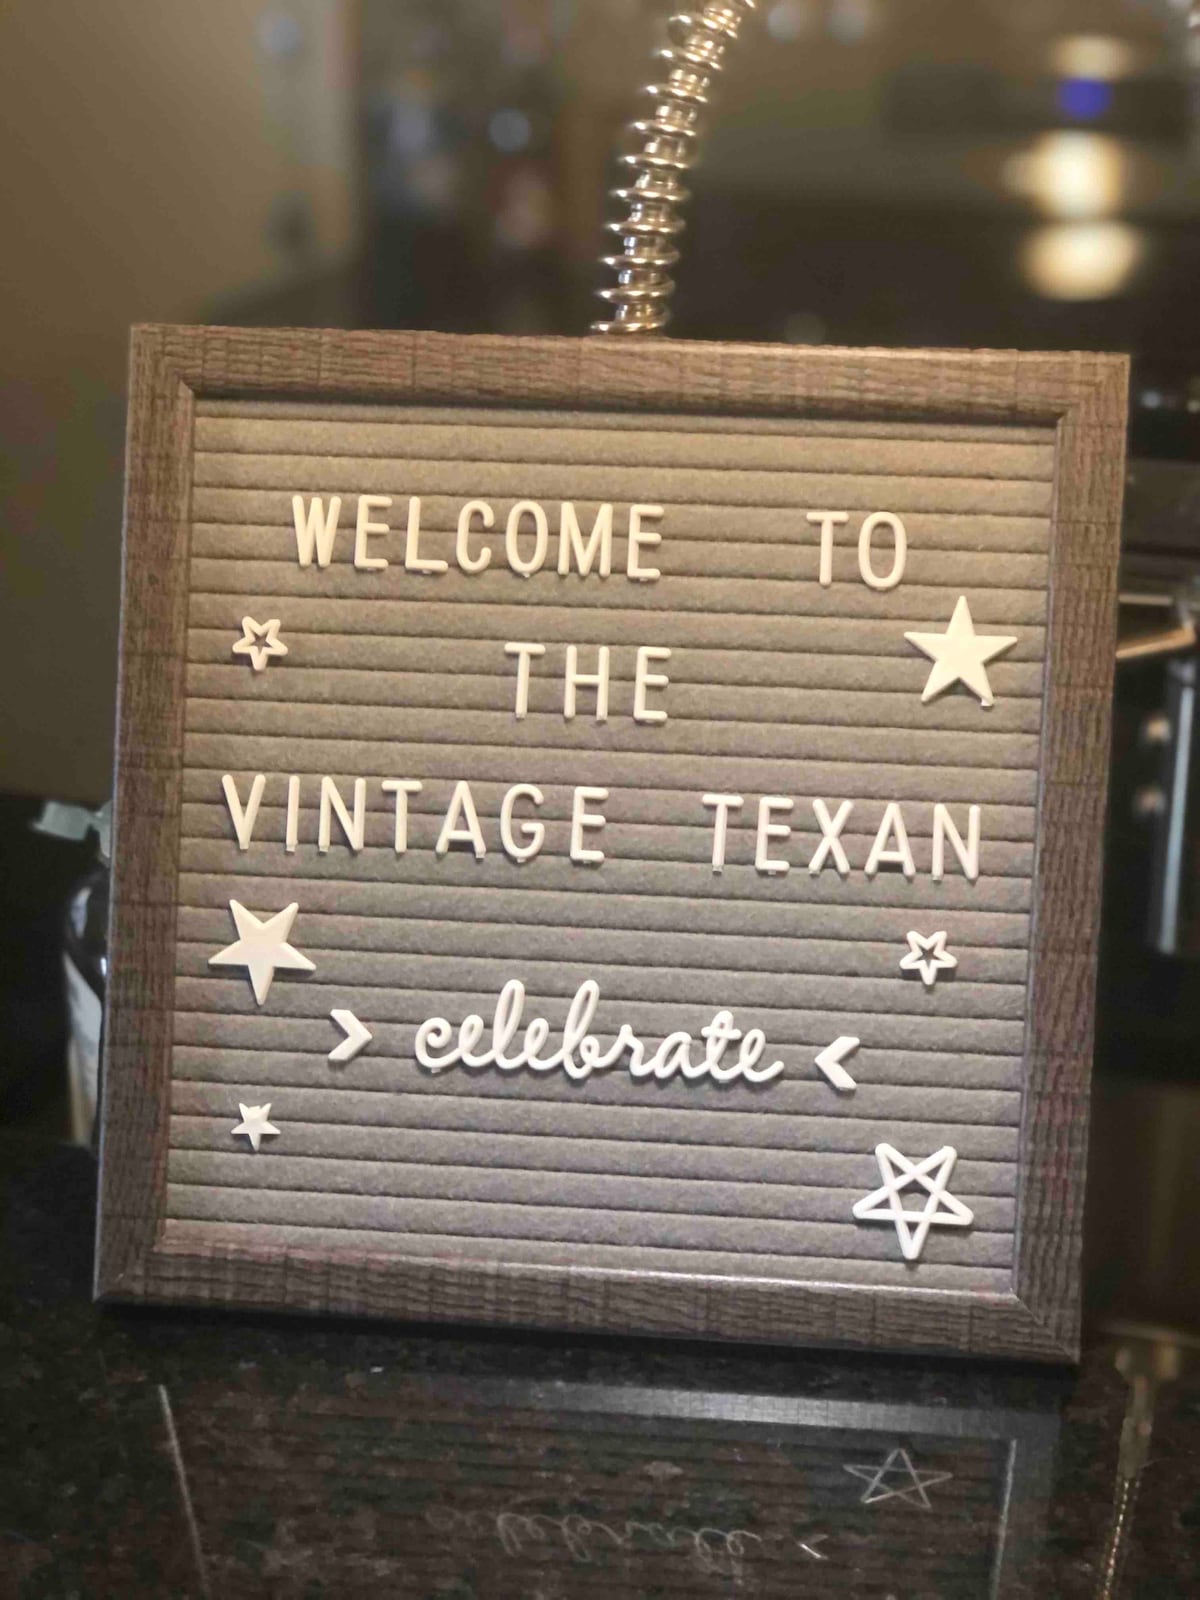 The Vintage Texan